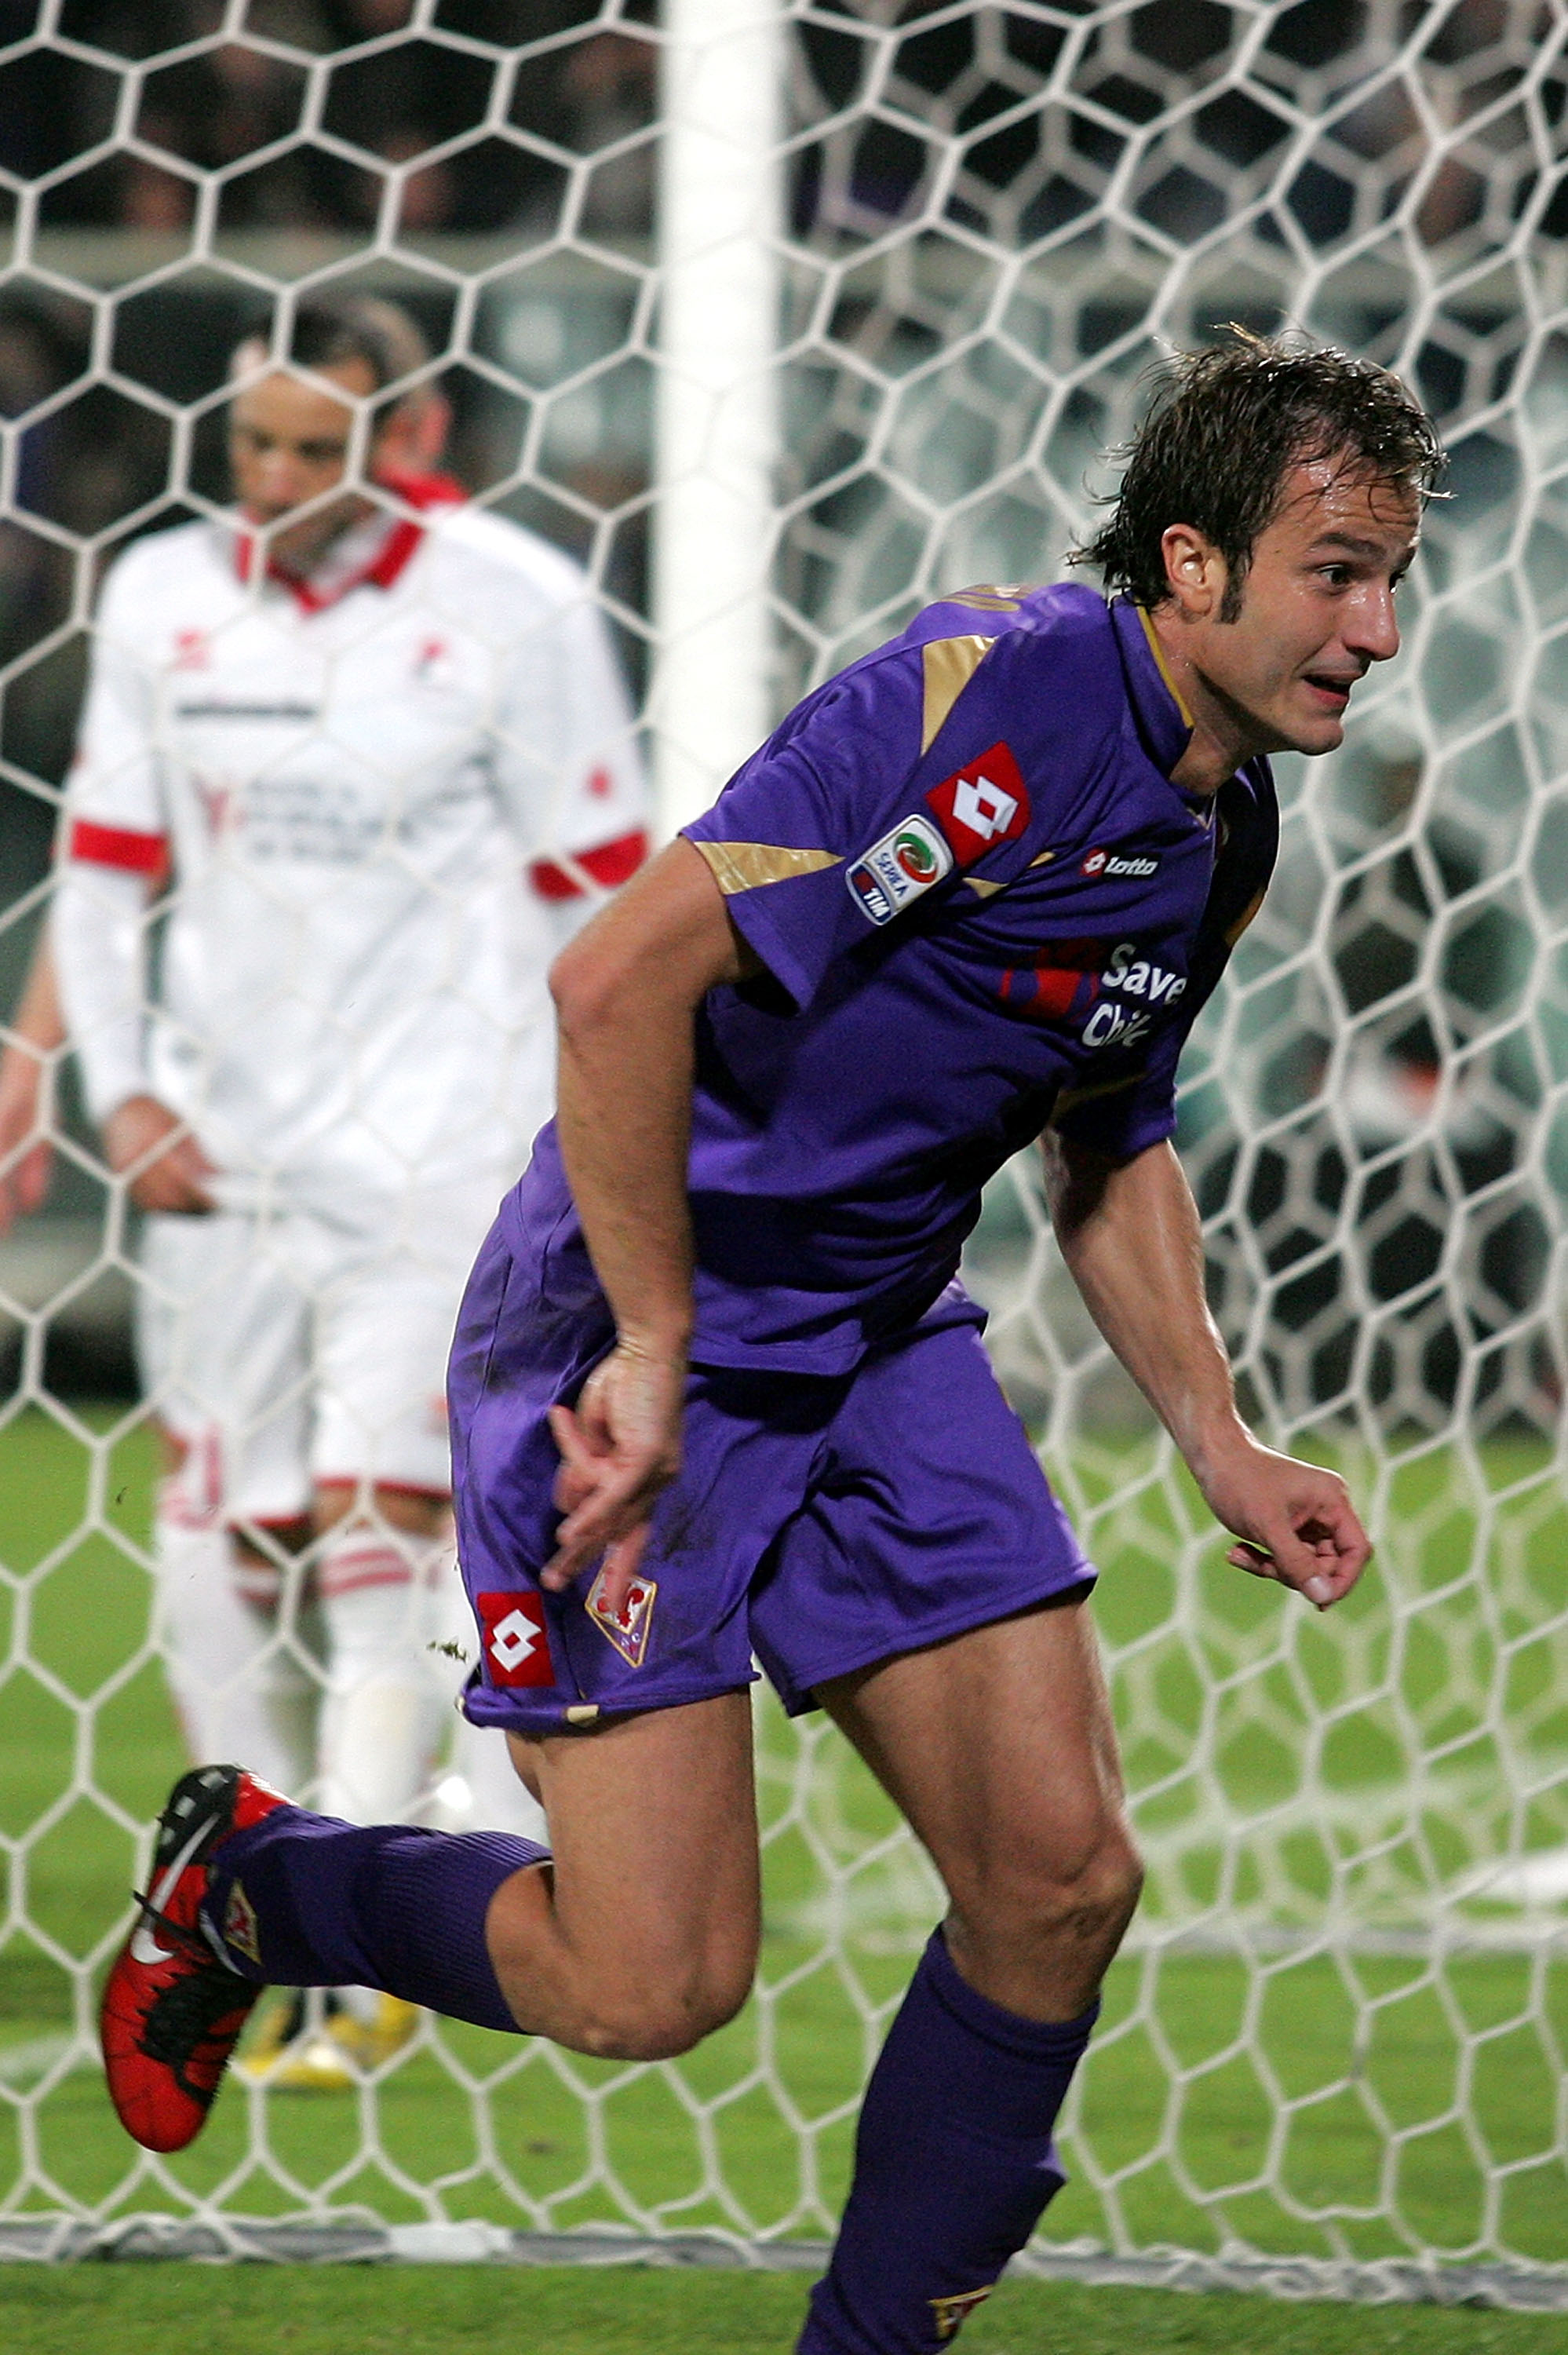 Alberto Gilardino scored his 131st career goal in Serie A as Fiorentina defeated Bari 2-1.